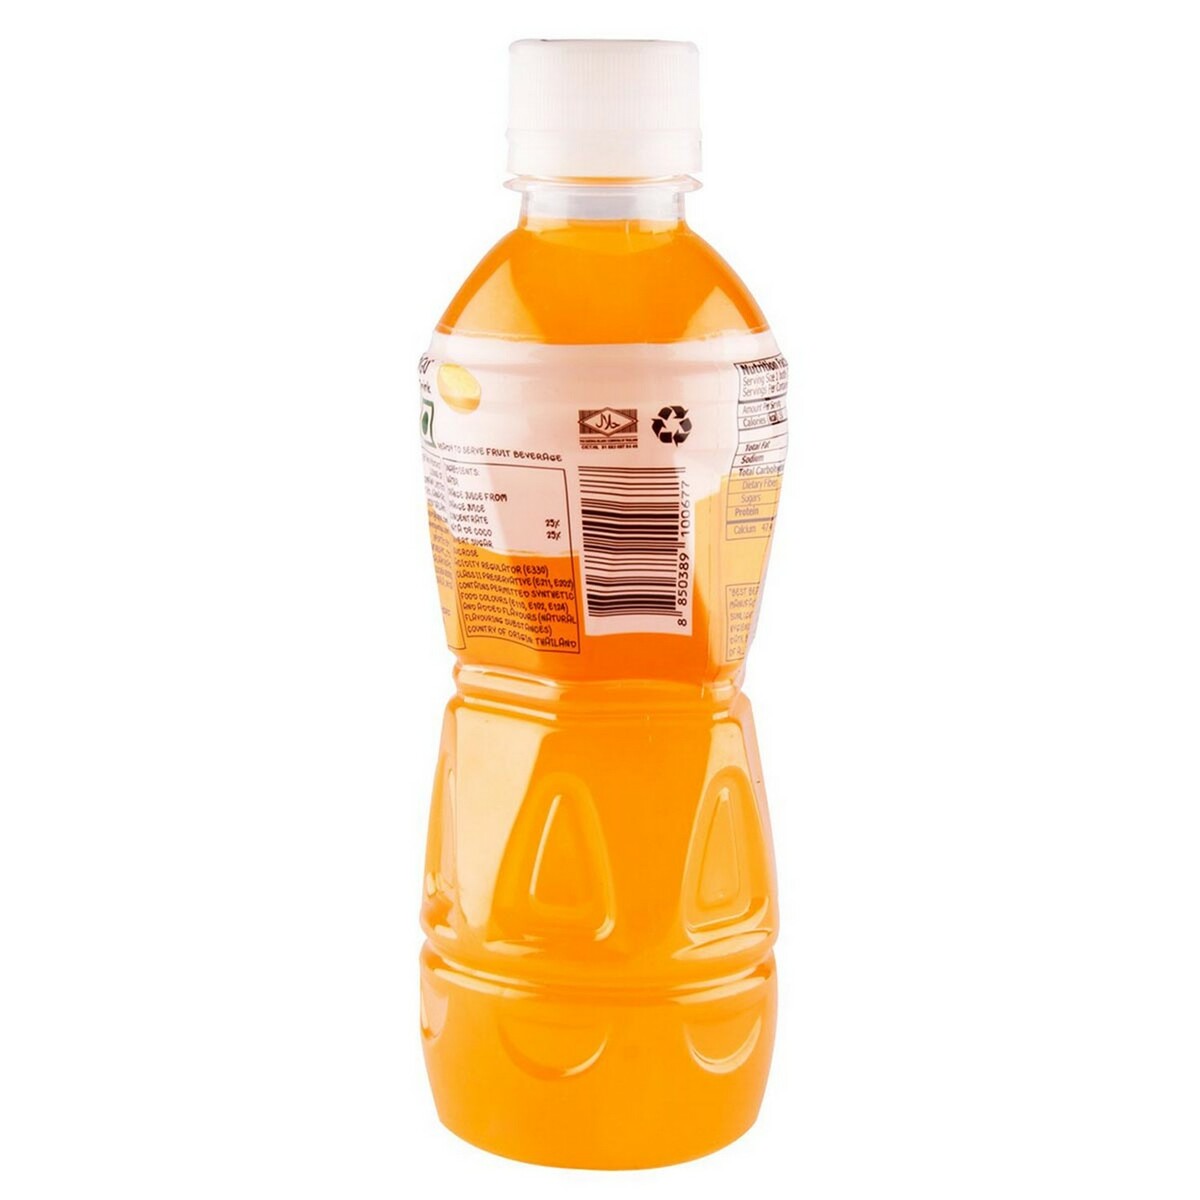 Mogu Mogu Orange Juice Nata De Coco 300ml